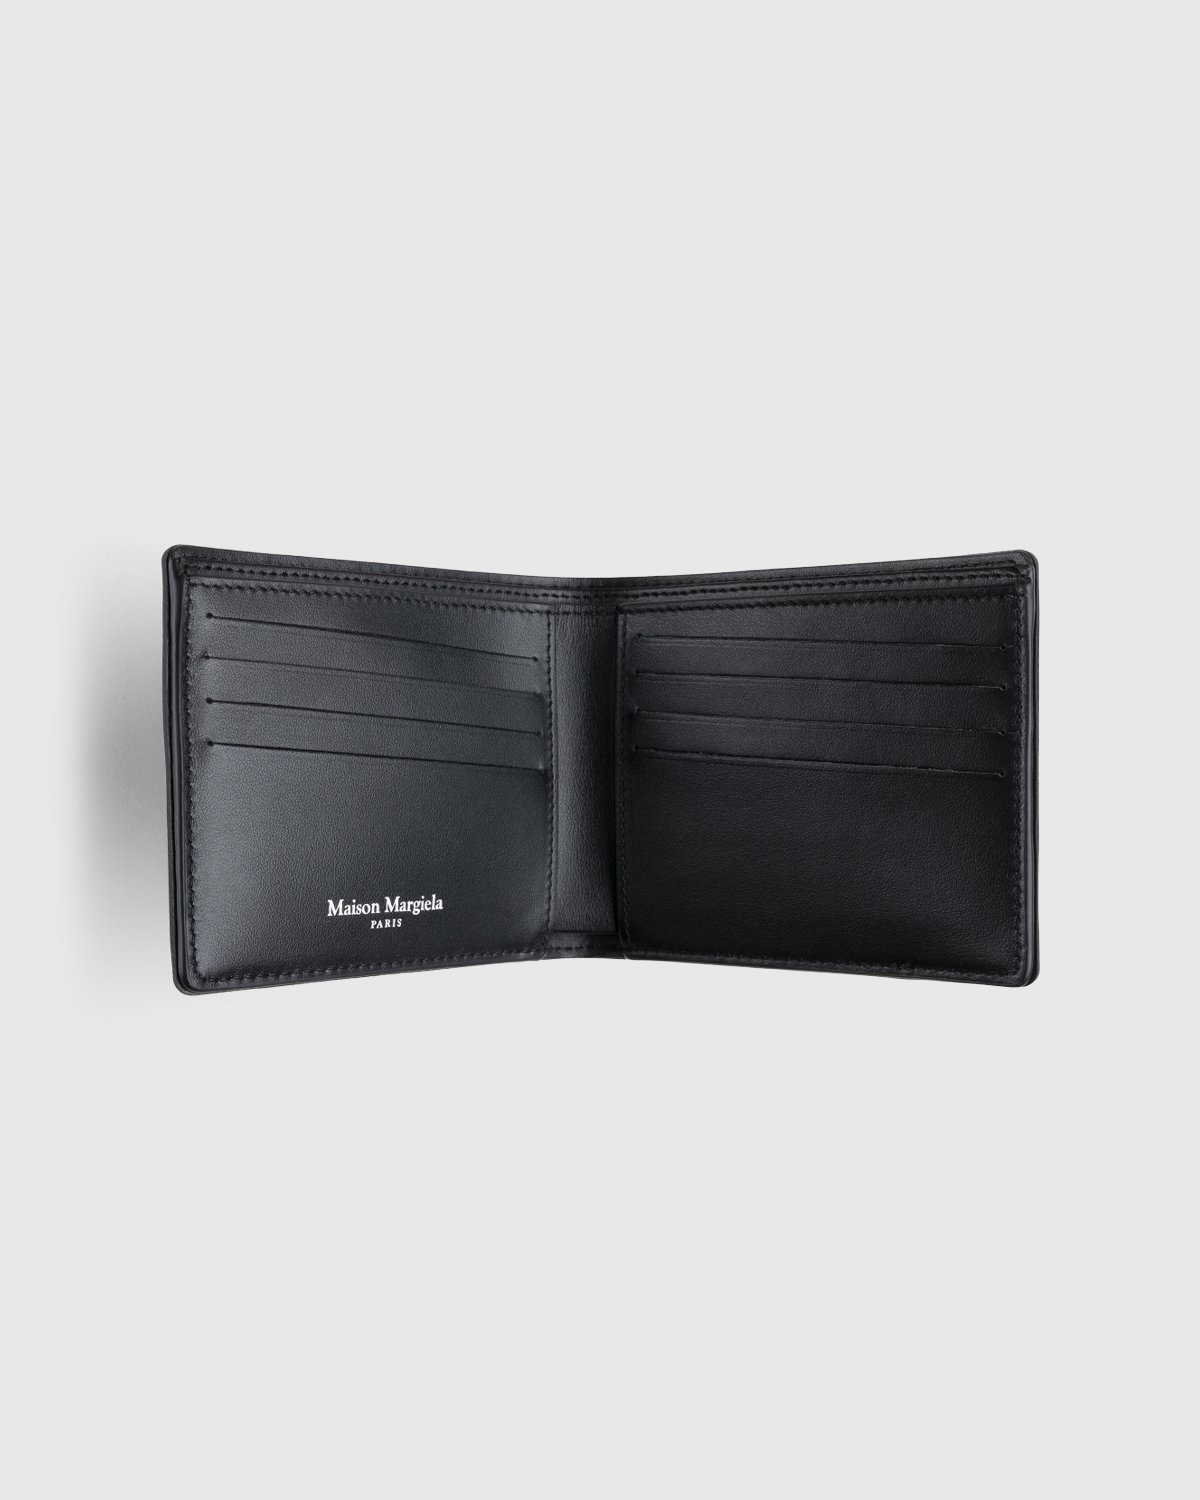 Maison Margiela - Bi-Fold Wallet Black - Accessories - Black - Image 3